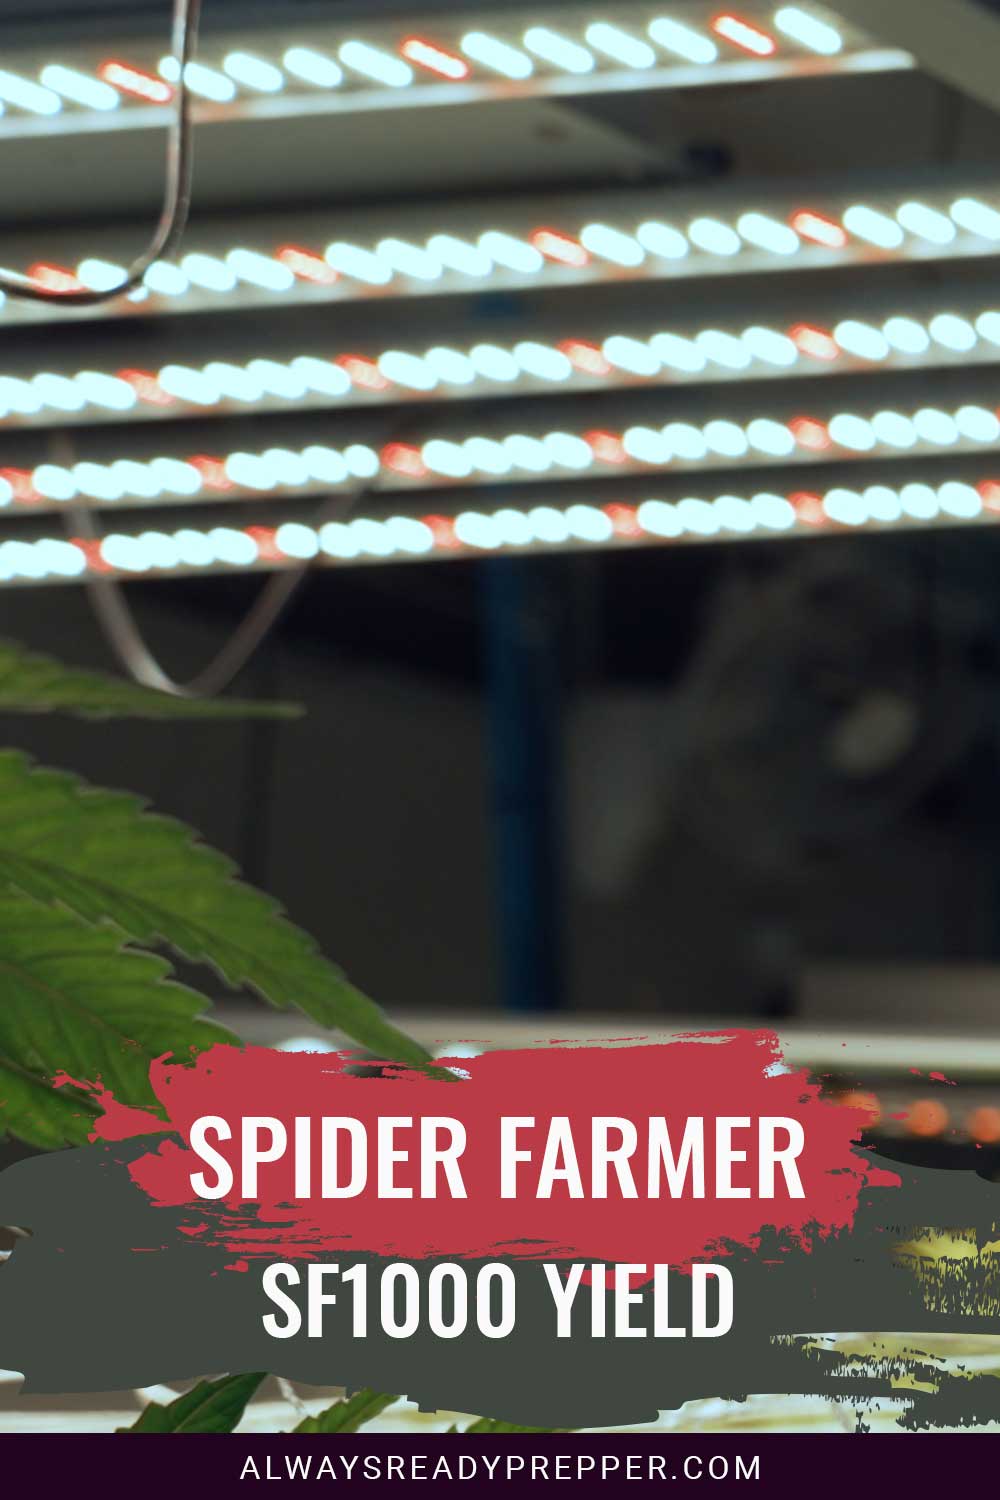 LED Farming lights over indoor farm - Spider Farmer SF1000 Yield